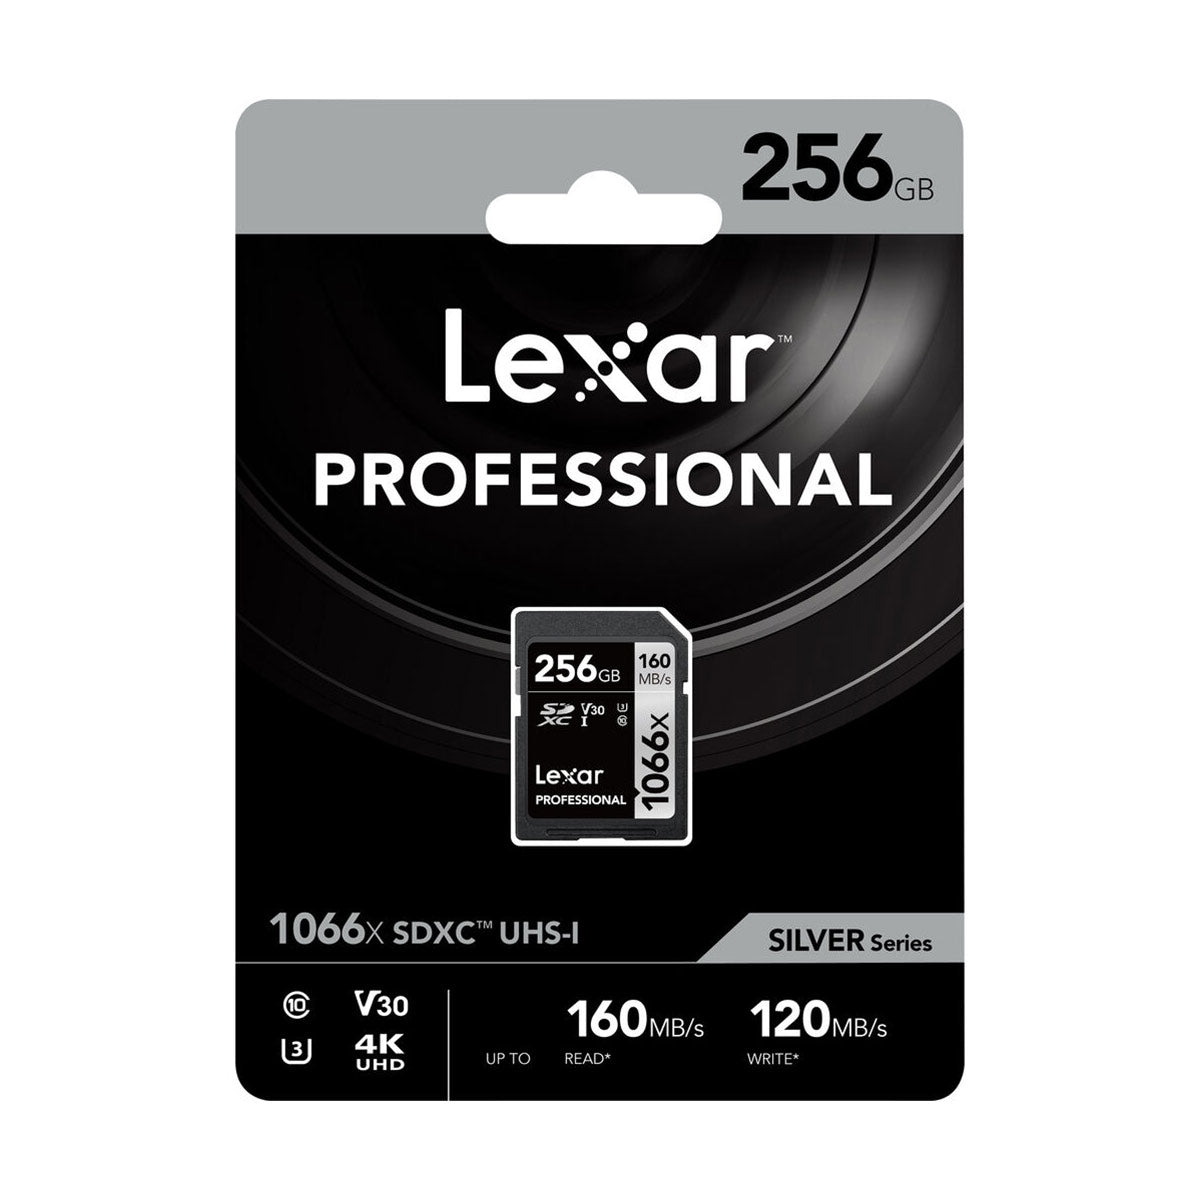 Lexar 256GB Professional 1066x UHS-I V30 SDXC Memory Card